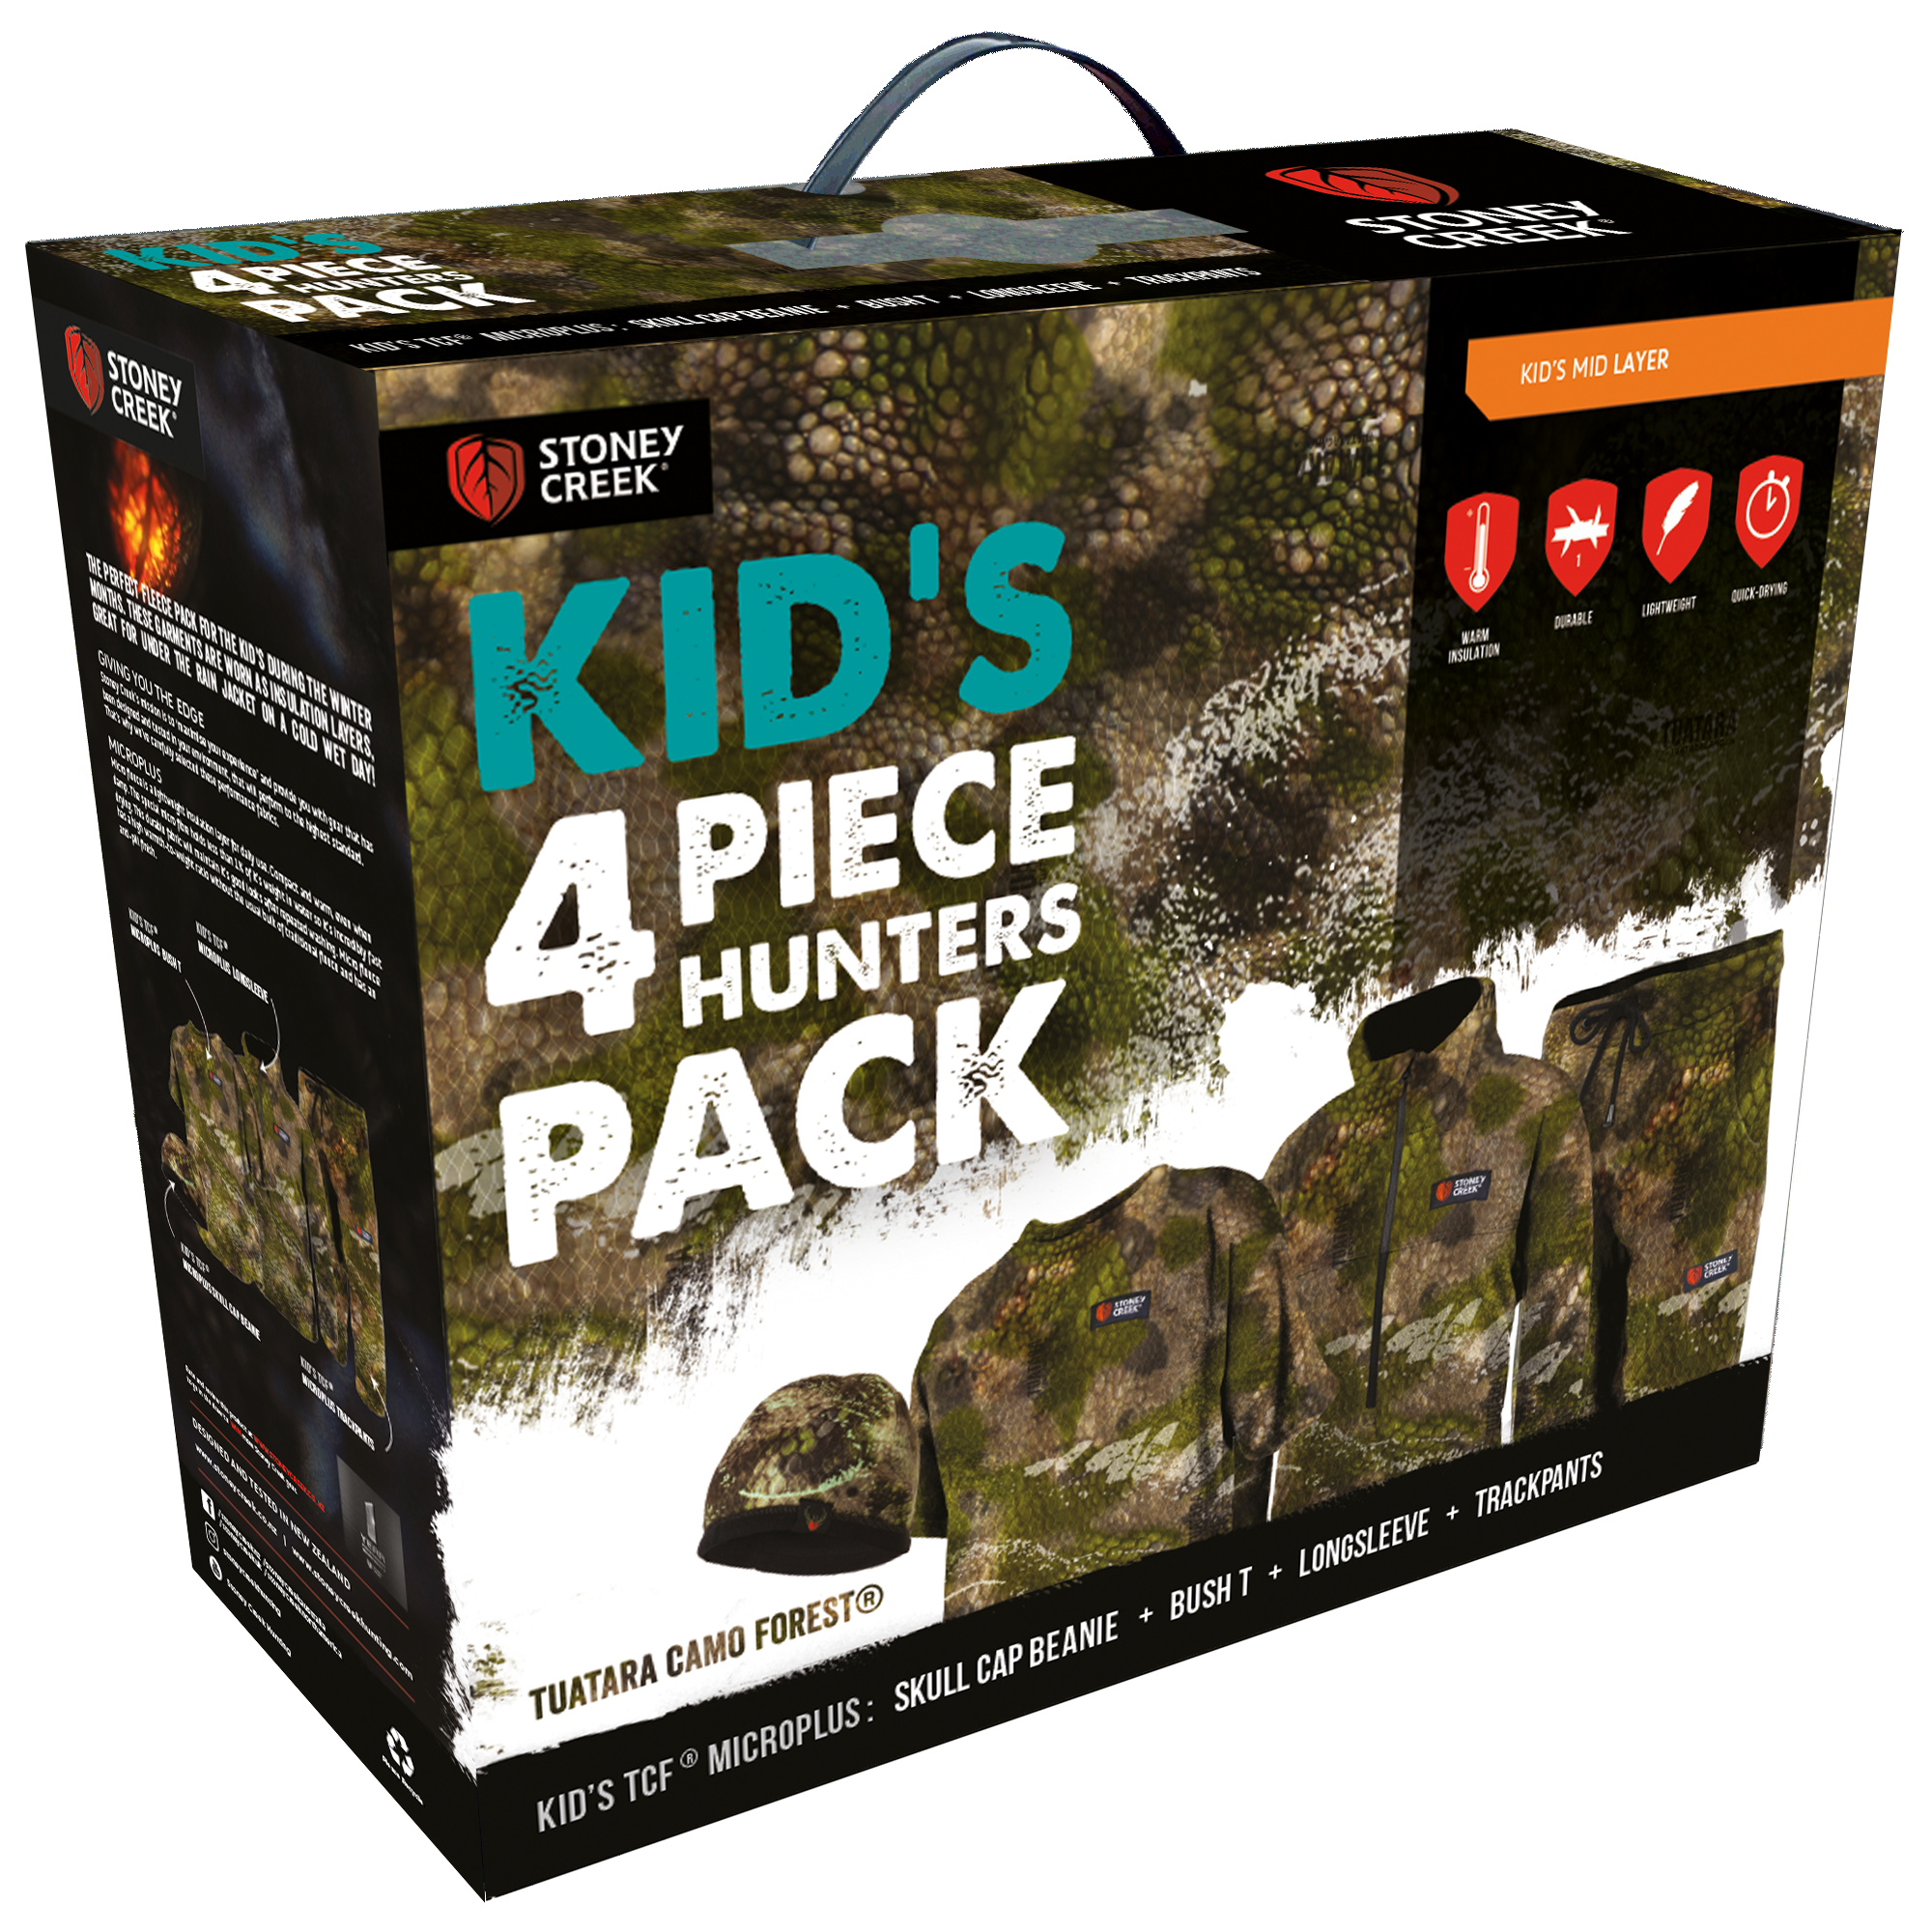 Stoney Creek Kids 4 Piece Camo Hunters Pack - TCF - 2 / TCF - Mansfield Hunting & Fishing - Products to prepare for Corona Virus